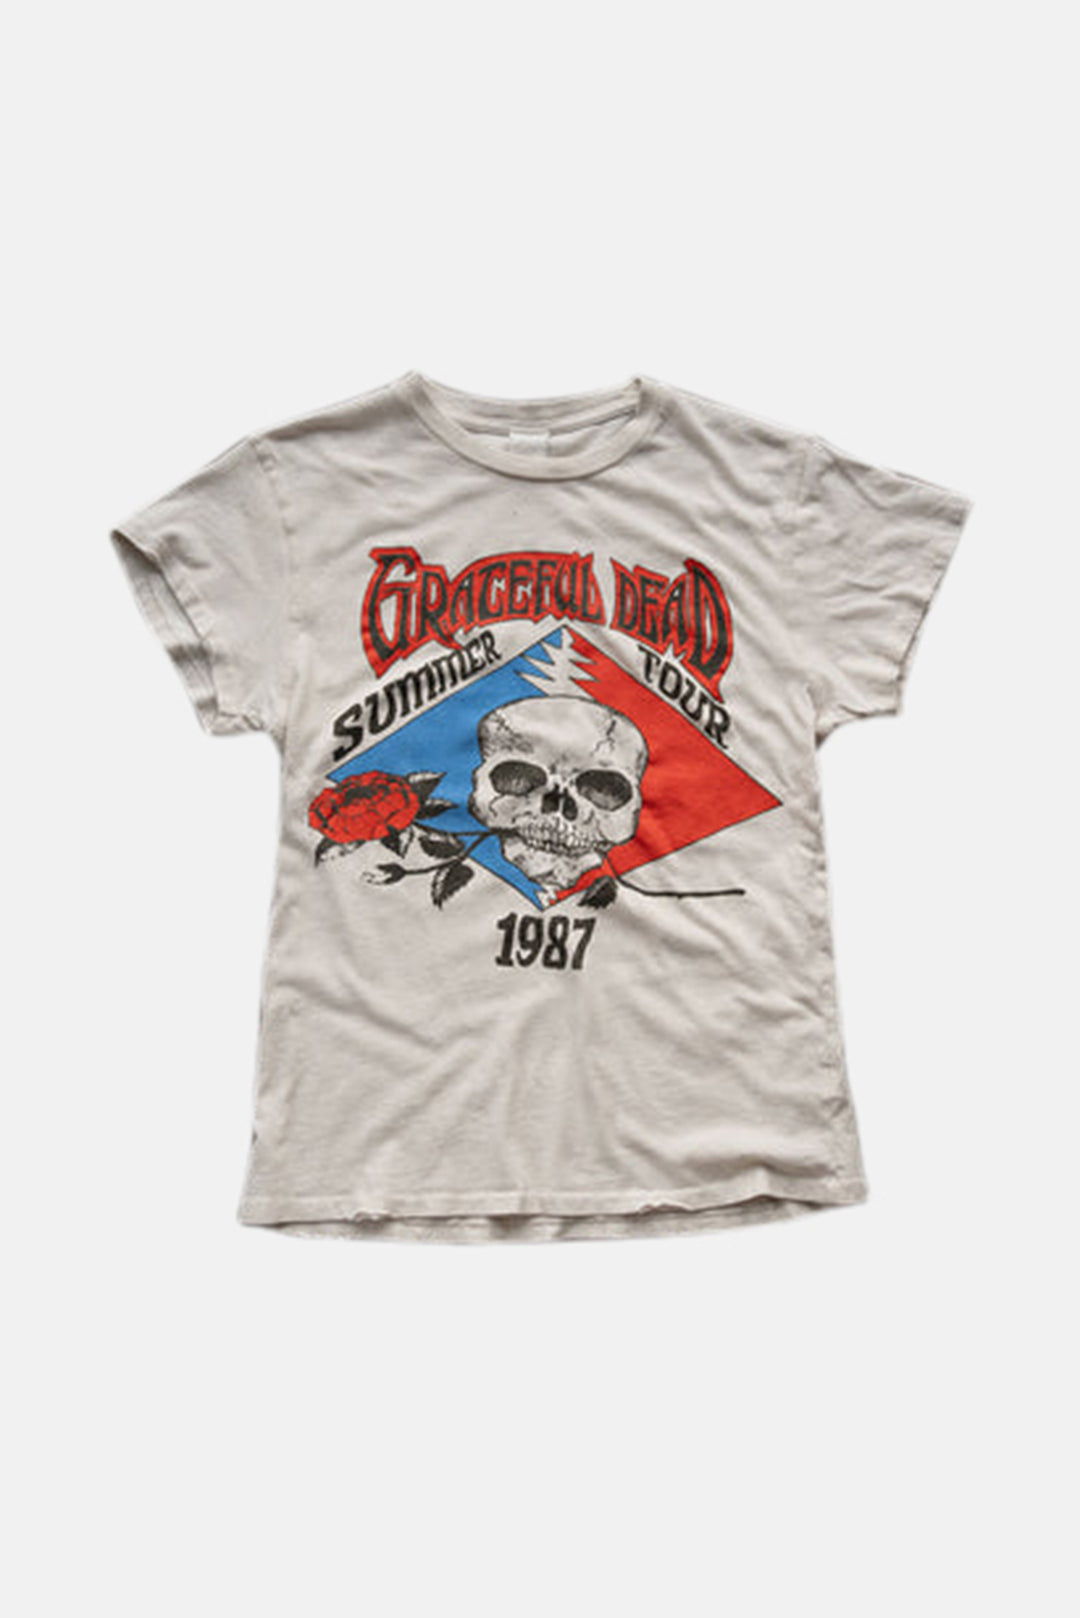 Grateful Dead Summer Tour '87 Tee Vintage White